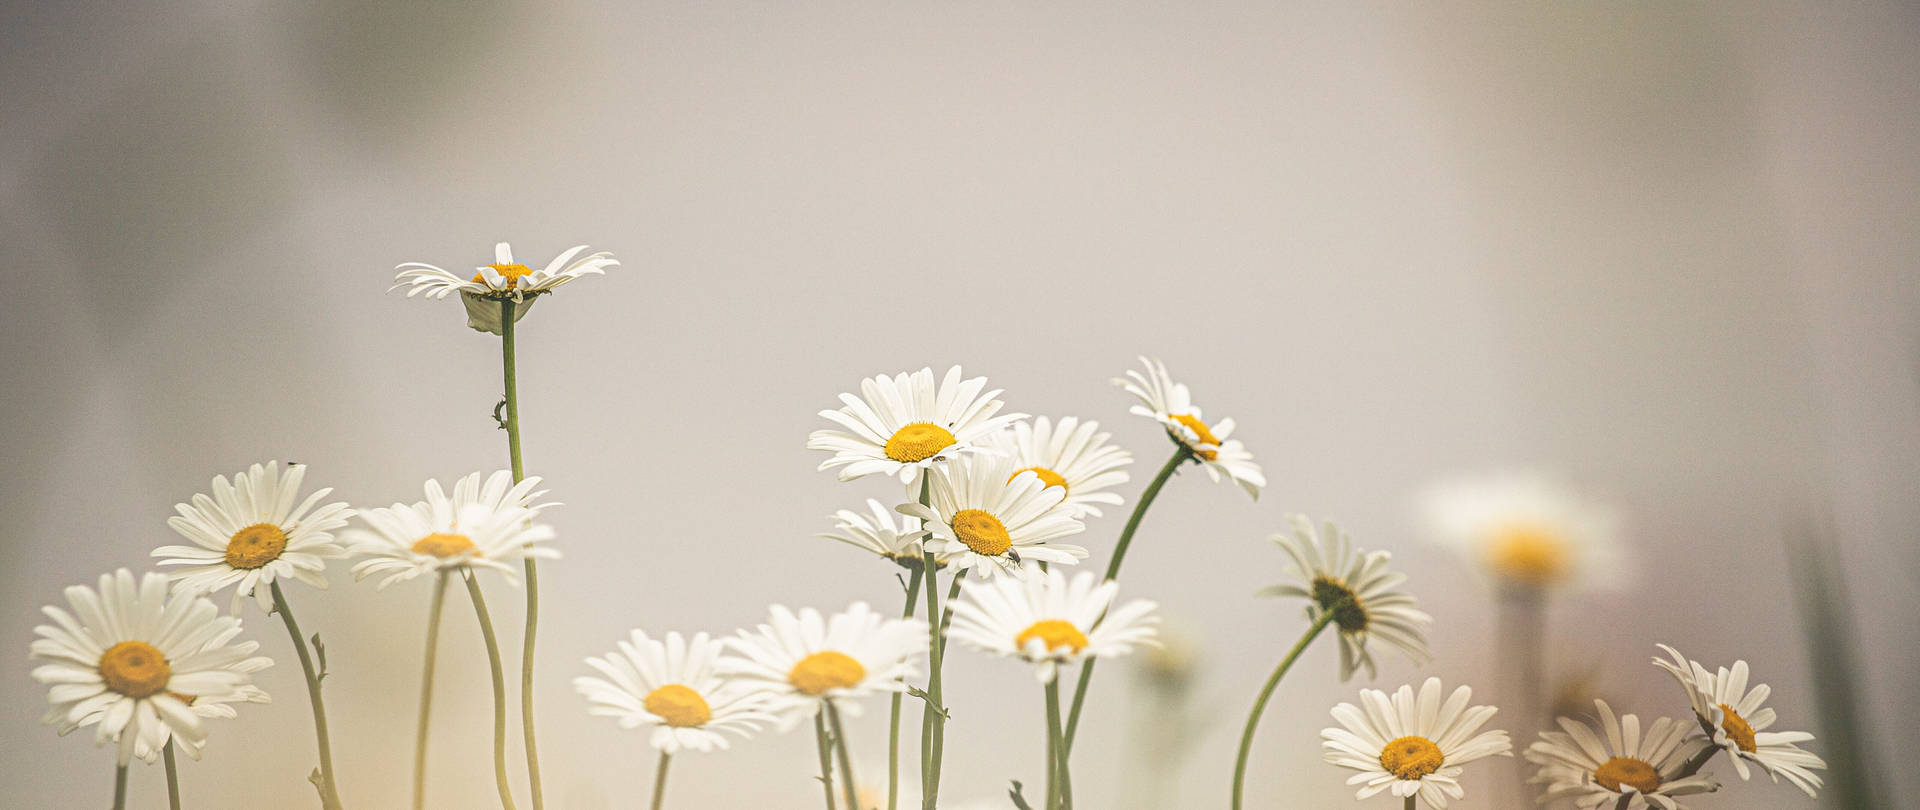 Daisy Flowers In Faint Filter 4k Background